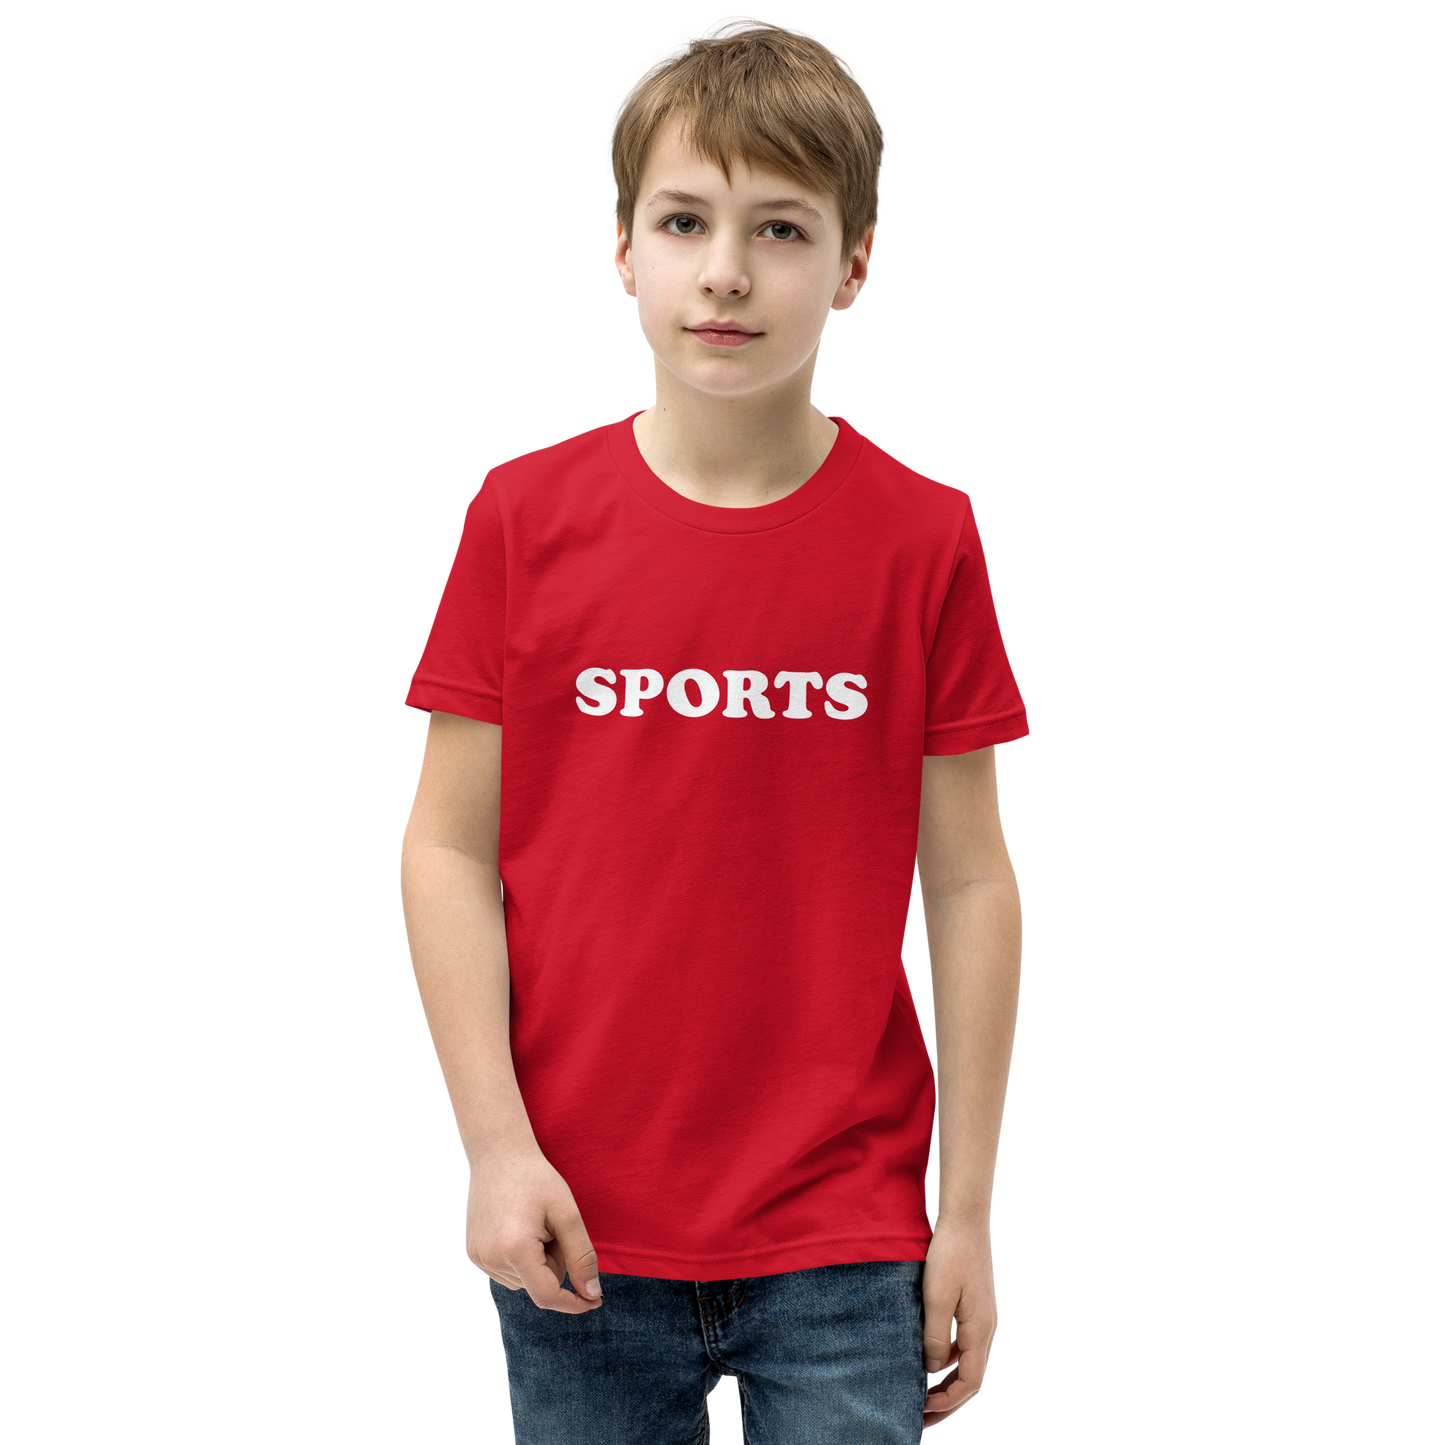 SPORTS Youth Short Sleeve T-Shirt